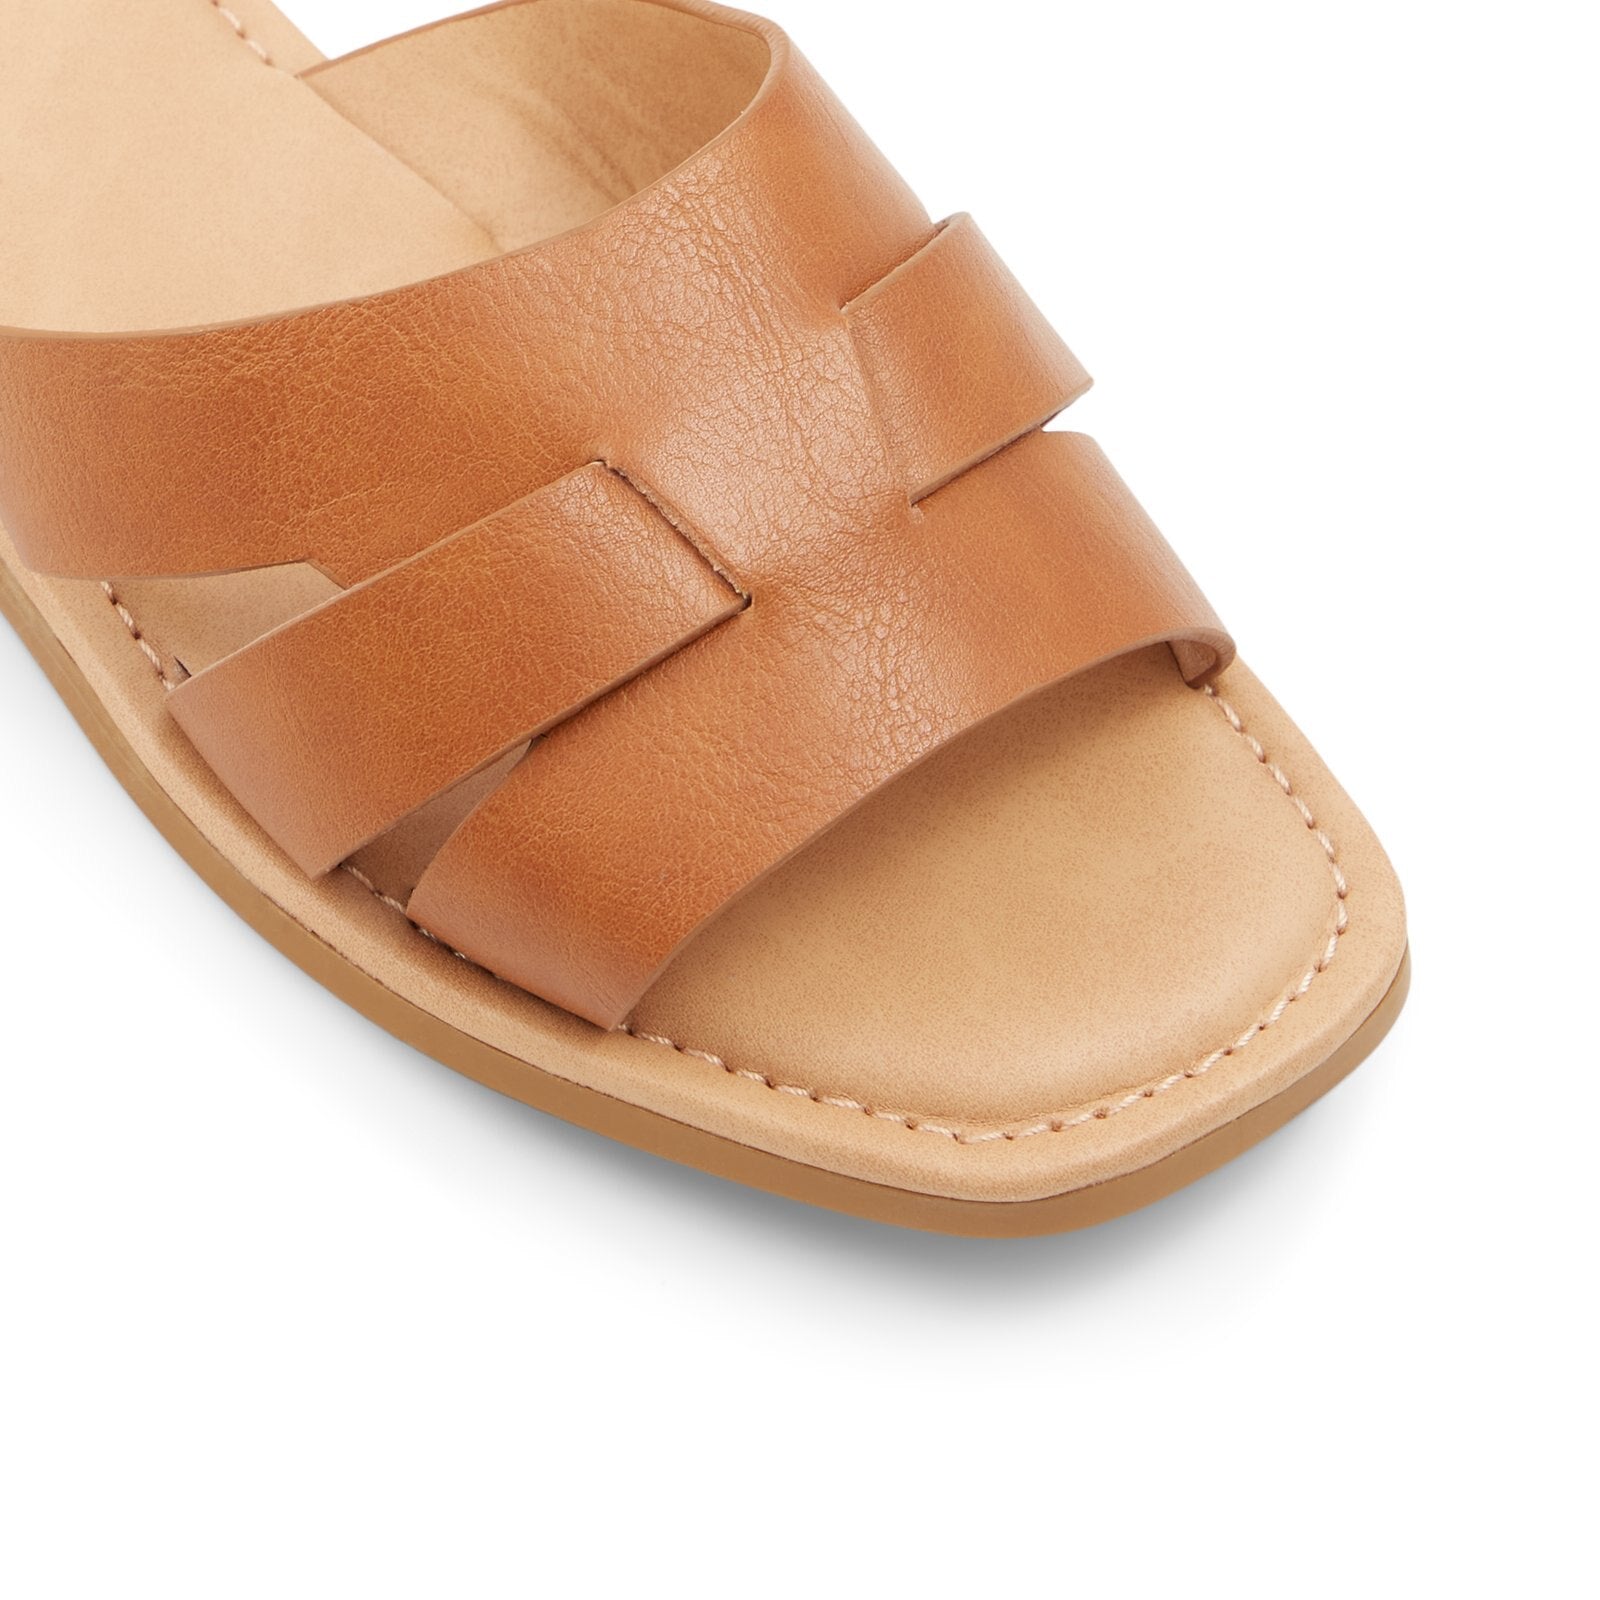 Briannaa / Flat Sandals Women Shoes - COGNAC - CALL IT SPRING KSA